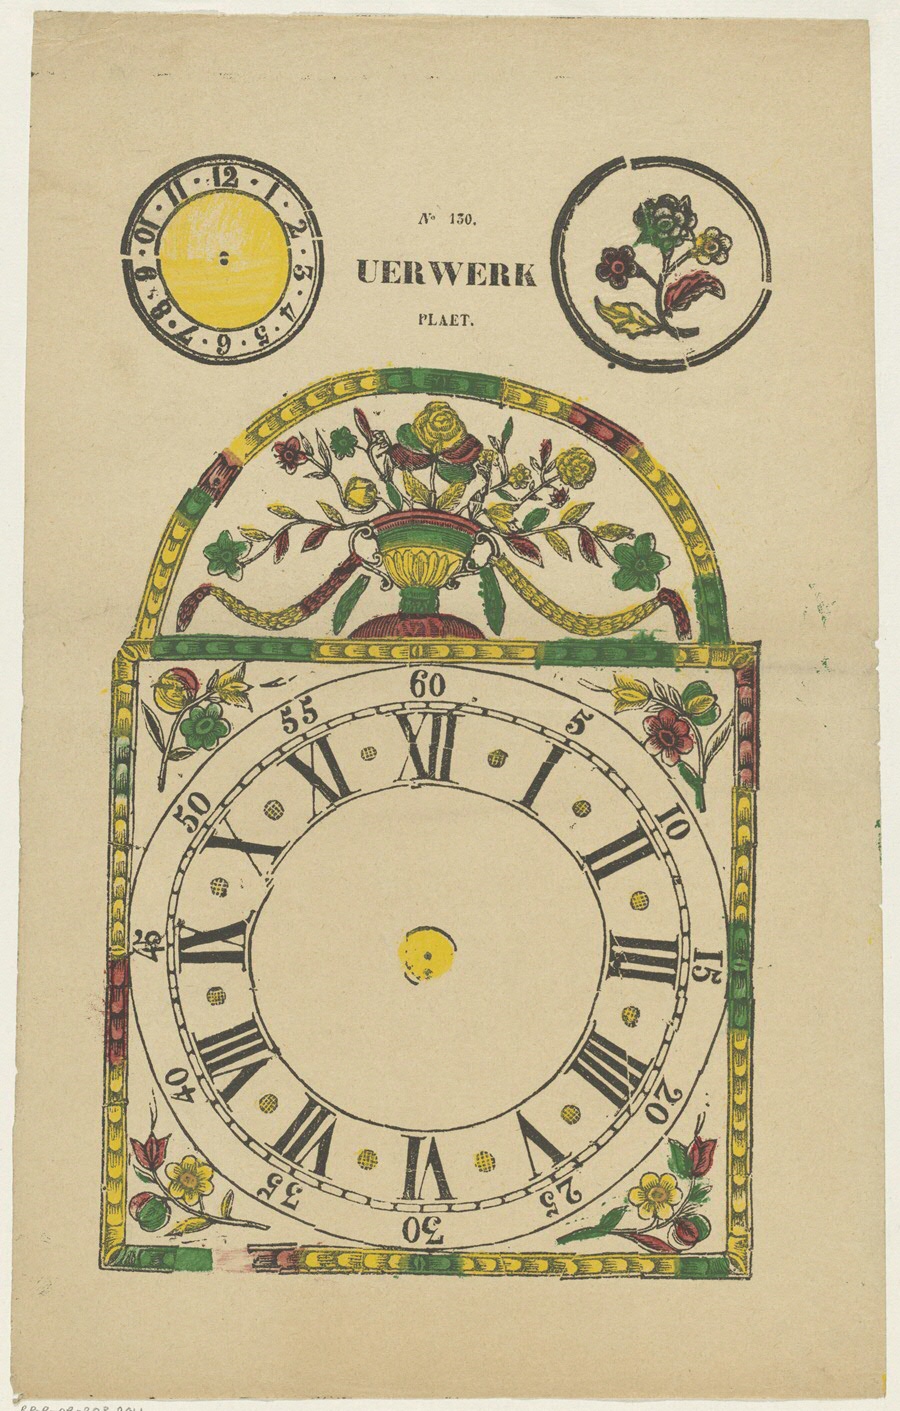 3d. Prent van vóór 1830: ‘Uerwerkplaet’ (uklu 05-20-049)3d. Pre-1830 Print: ‘Hours of the Clock’ (uklu 05-20-049)